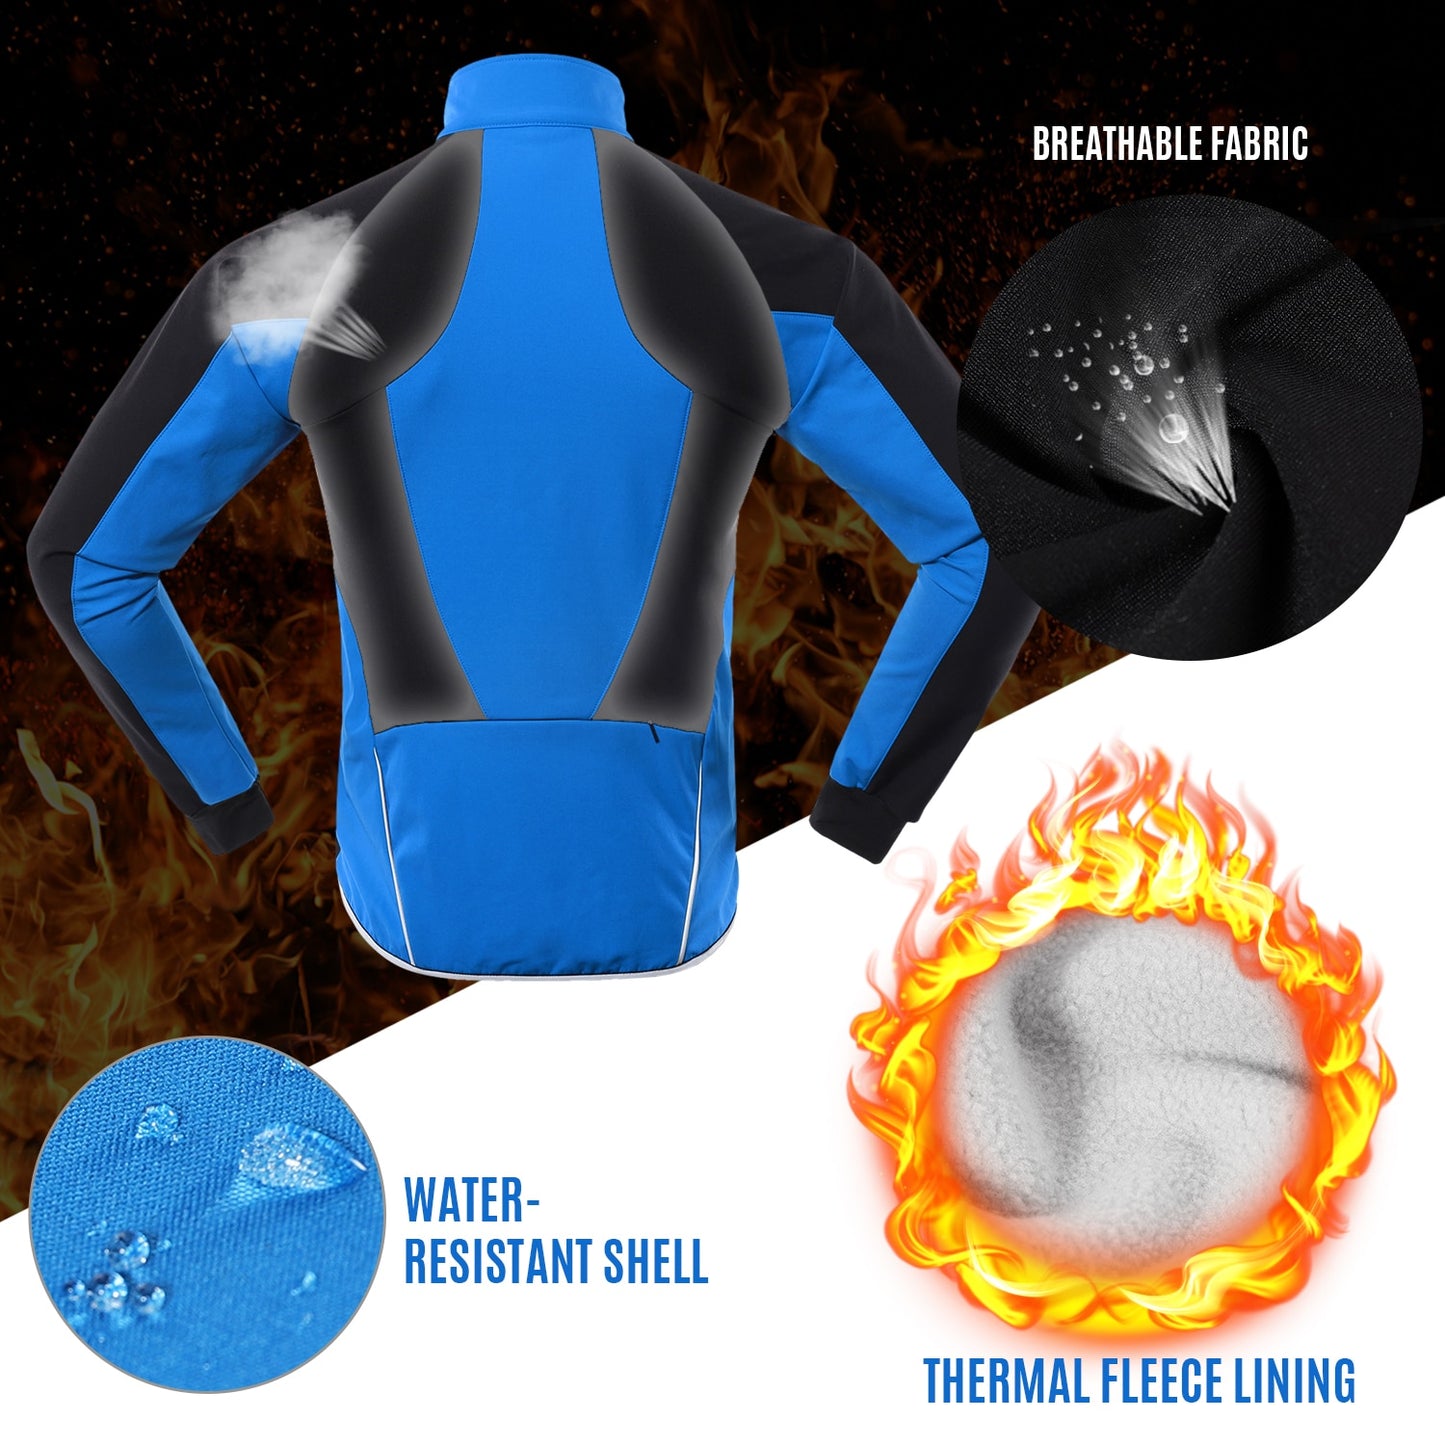 ARSUXEO Hi-Viz Men's Winter Waterproof/Windproof Thermal Fleece-lined Cycling Jacket - Reflective/5 Colours